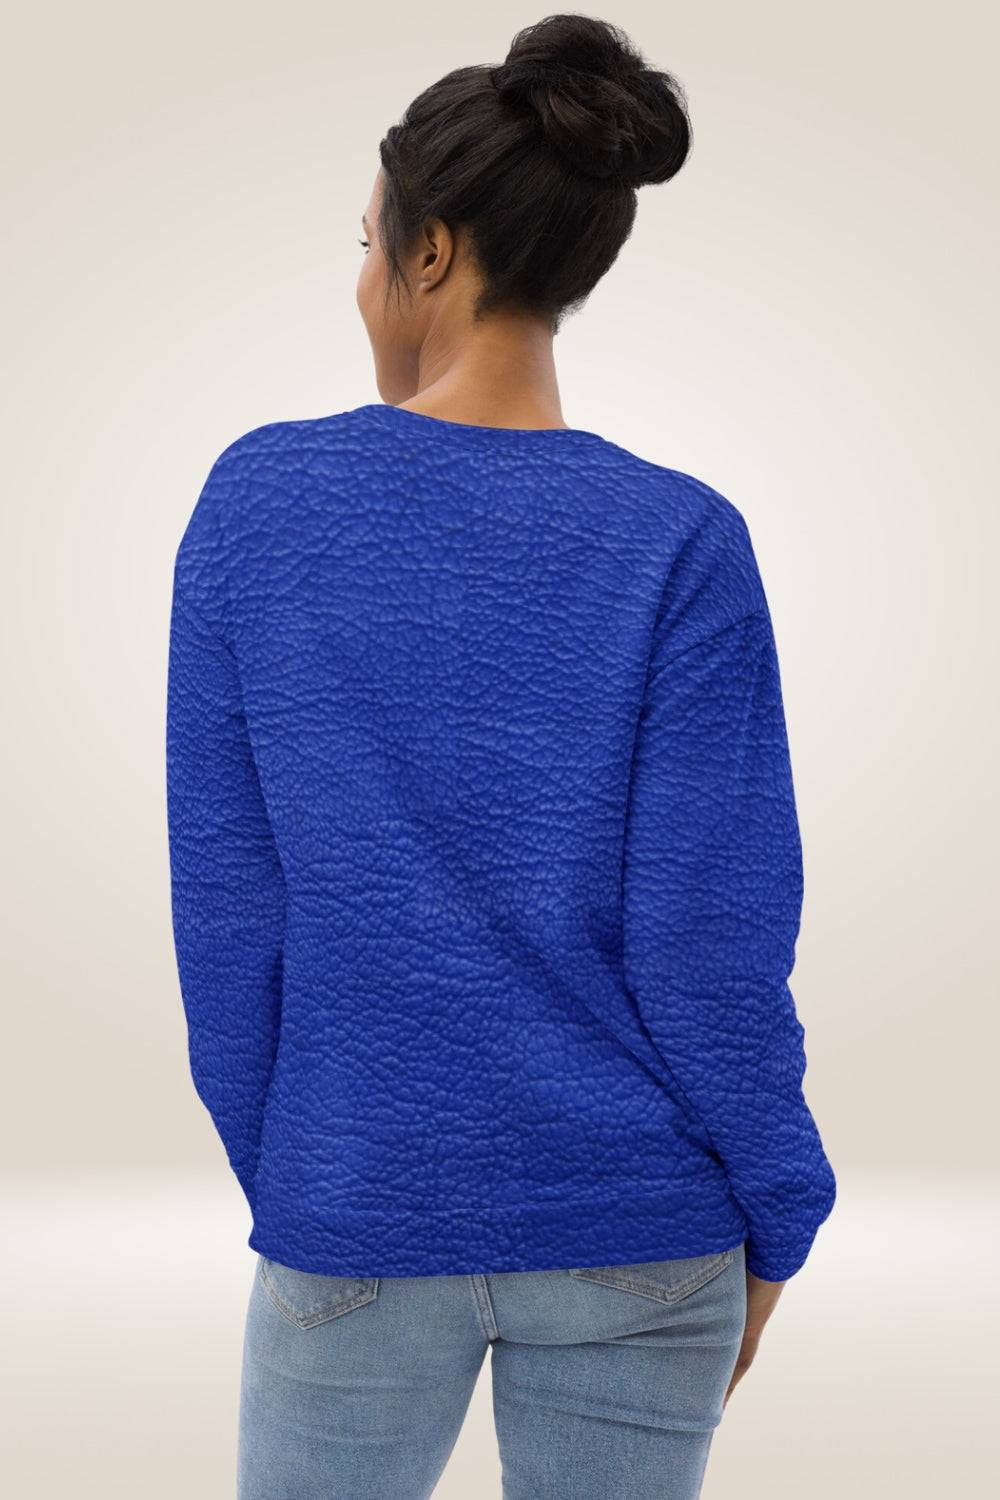 Leather Print Blue Crewneck Sweatshirt - TGC Boutique - Sweatshirt